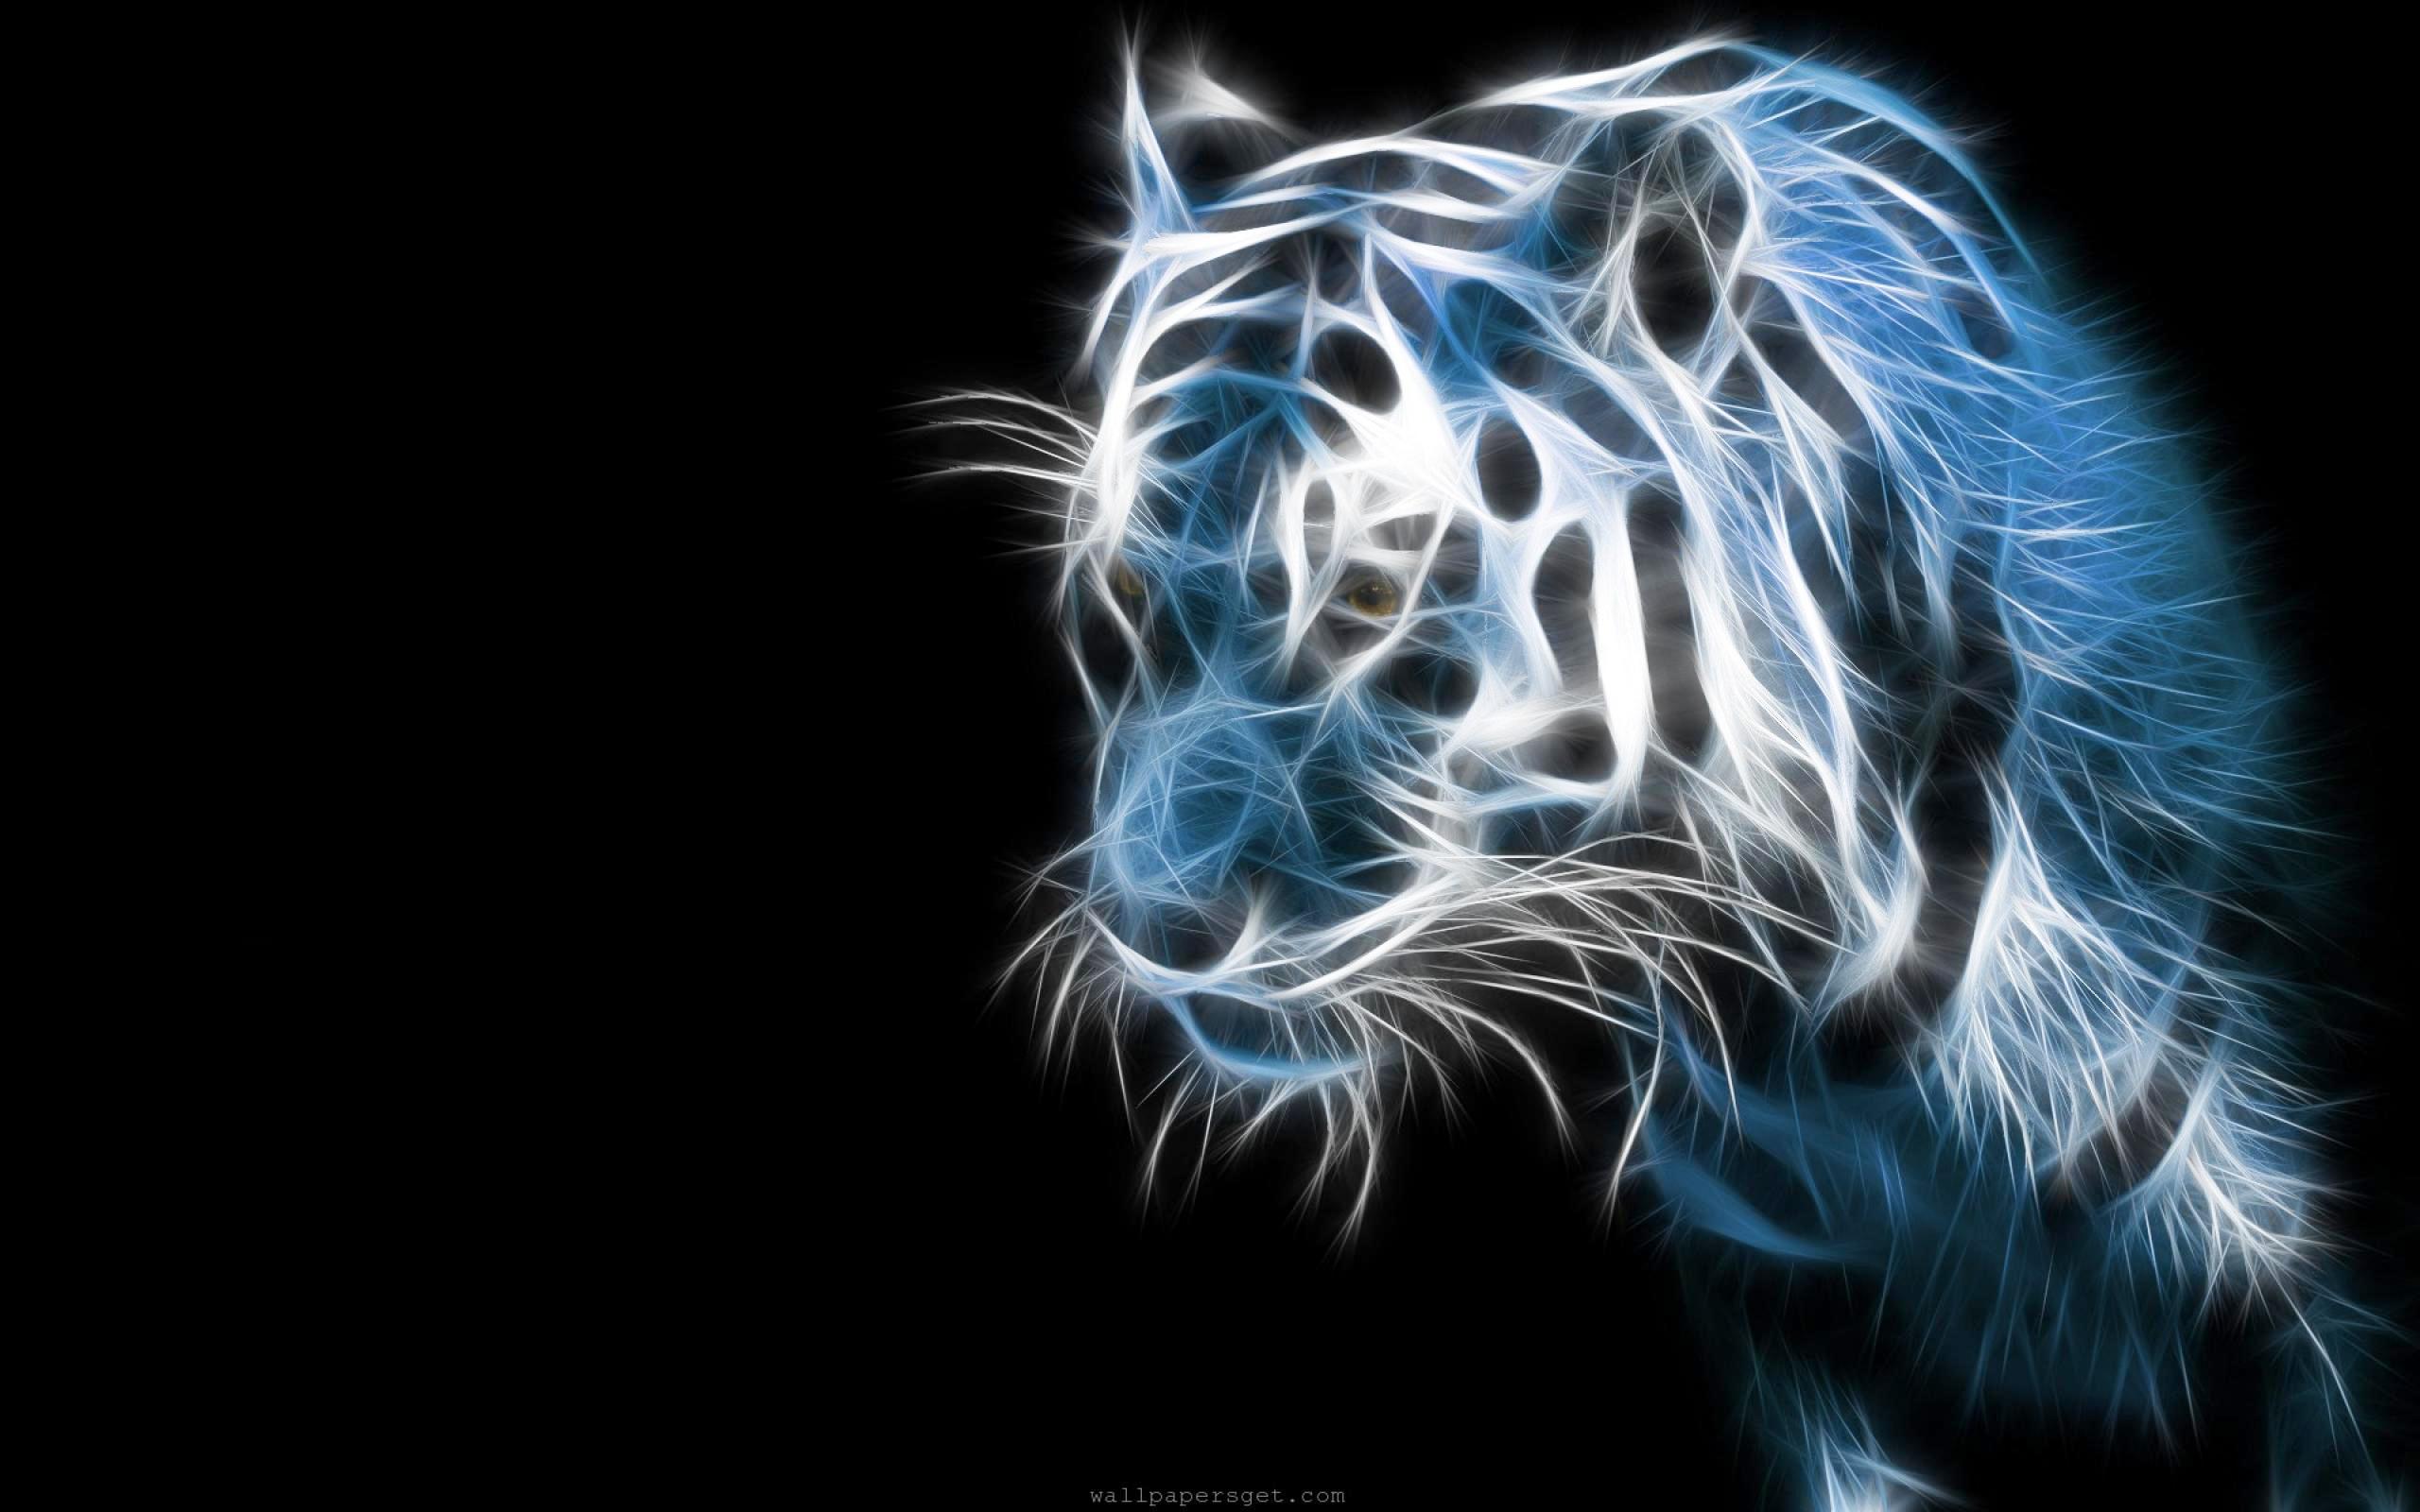 Tiger wallpapers for desktop free download